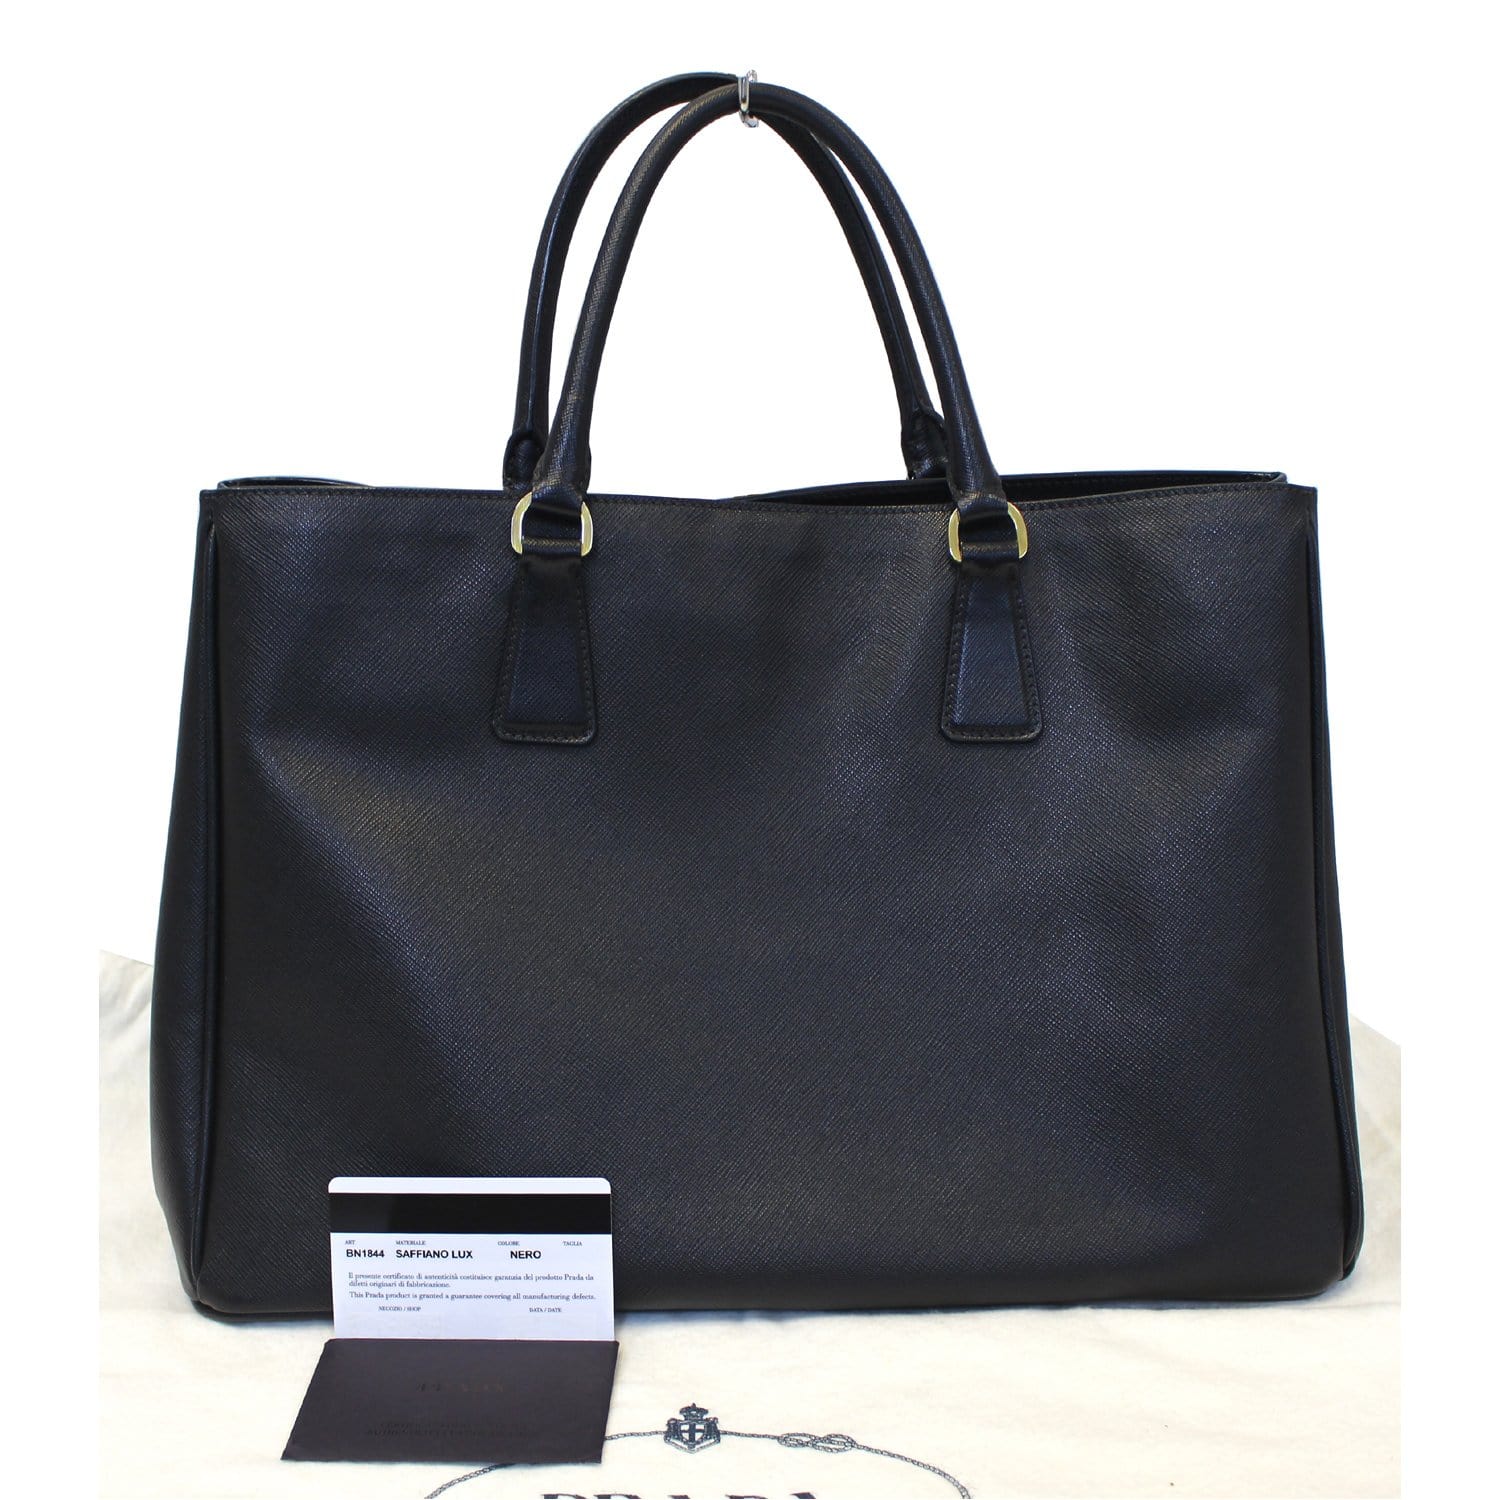 Prada - Women's Medium Galleria Saffiano Bag Tote - Gray - Leather